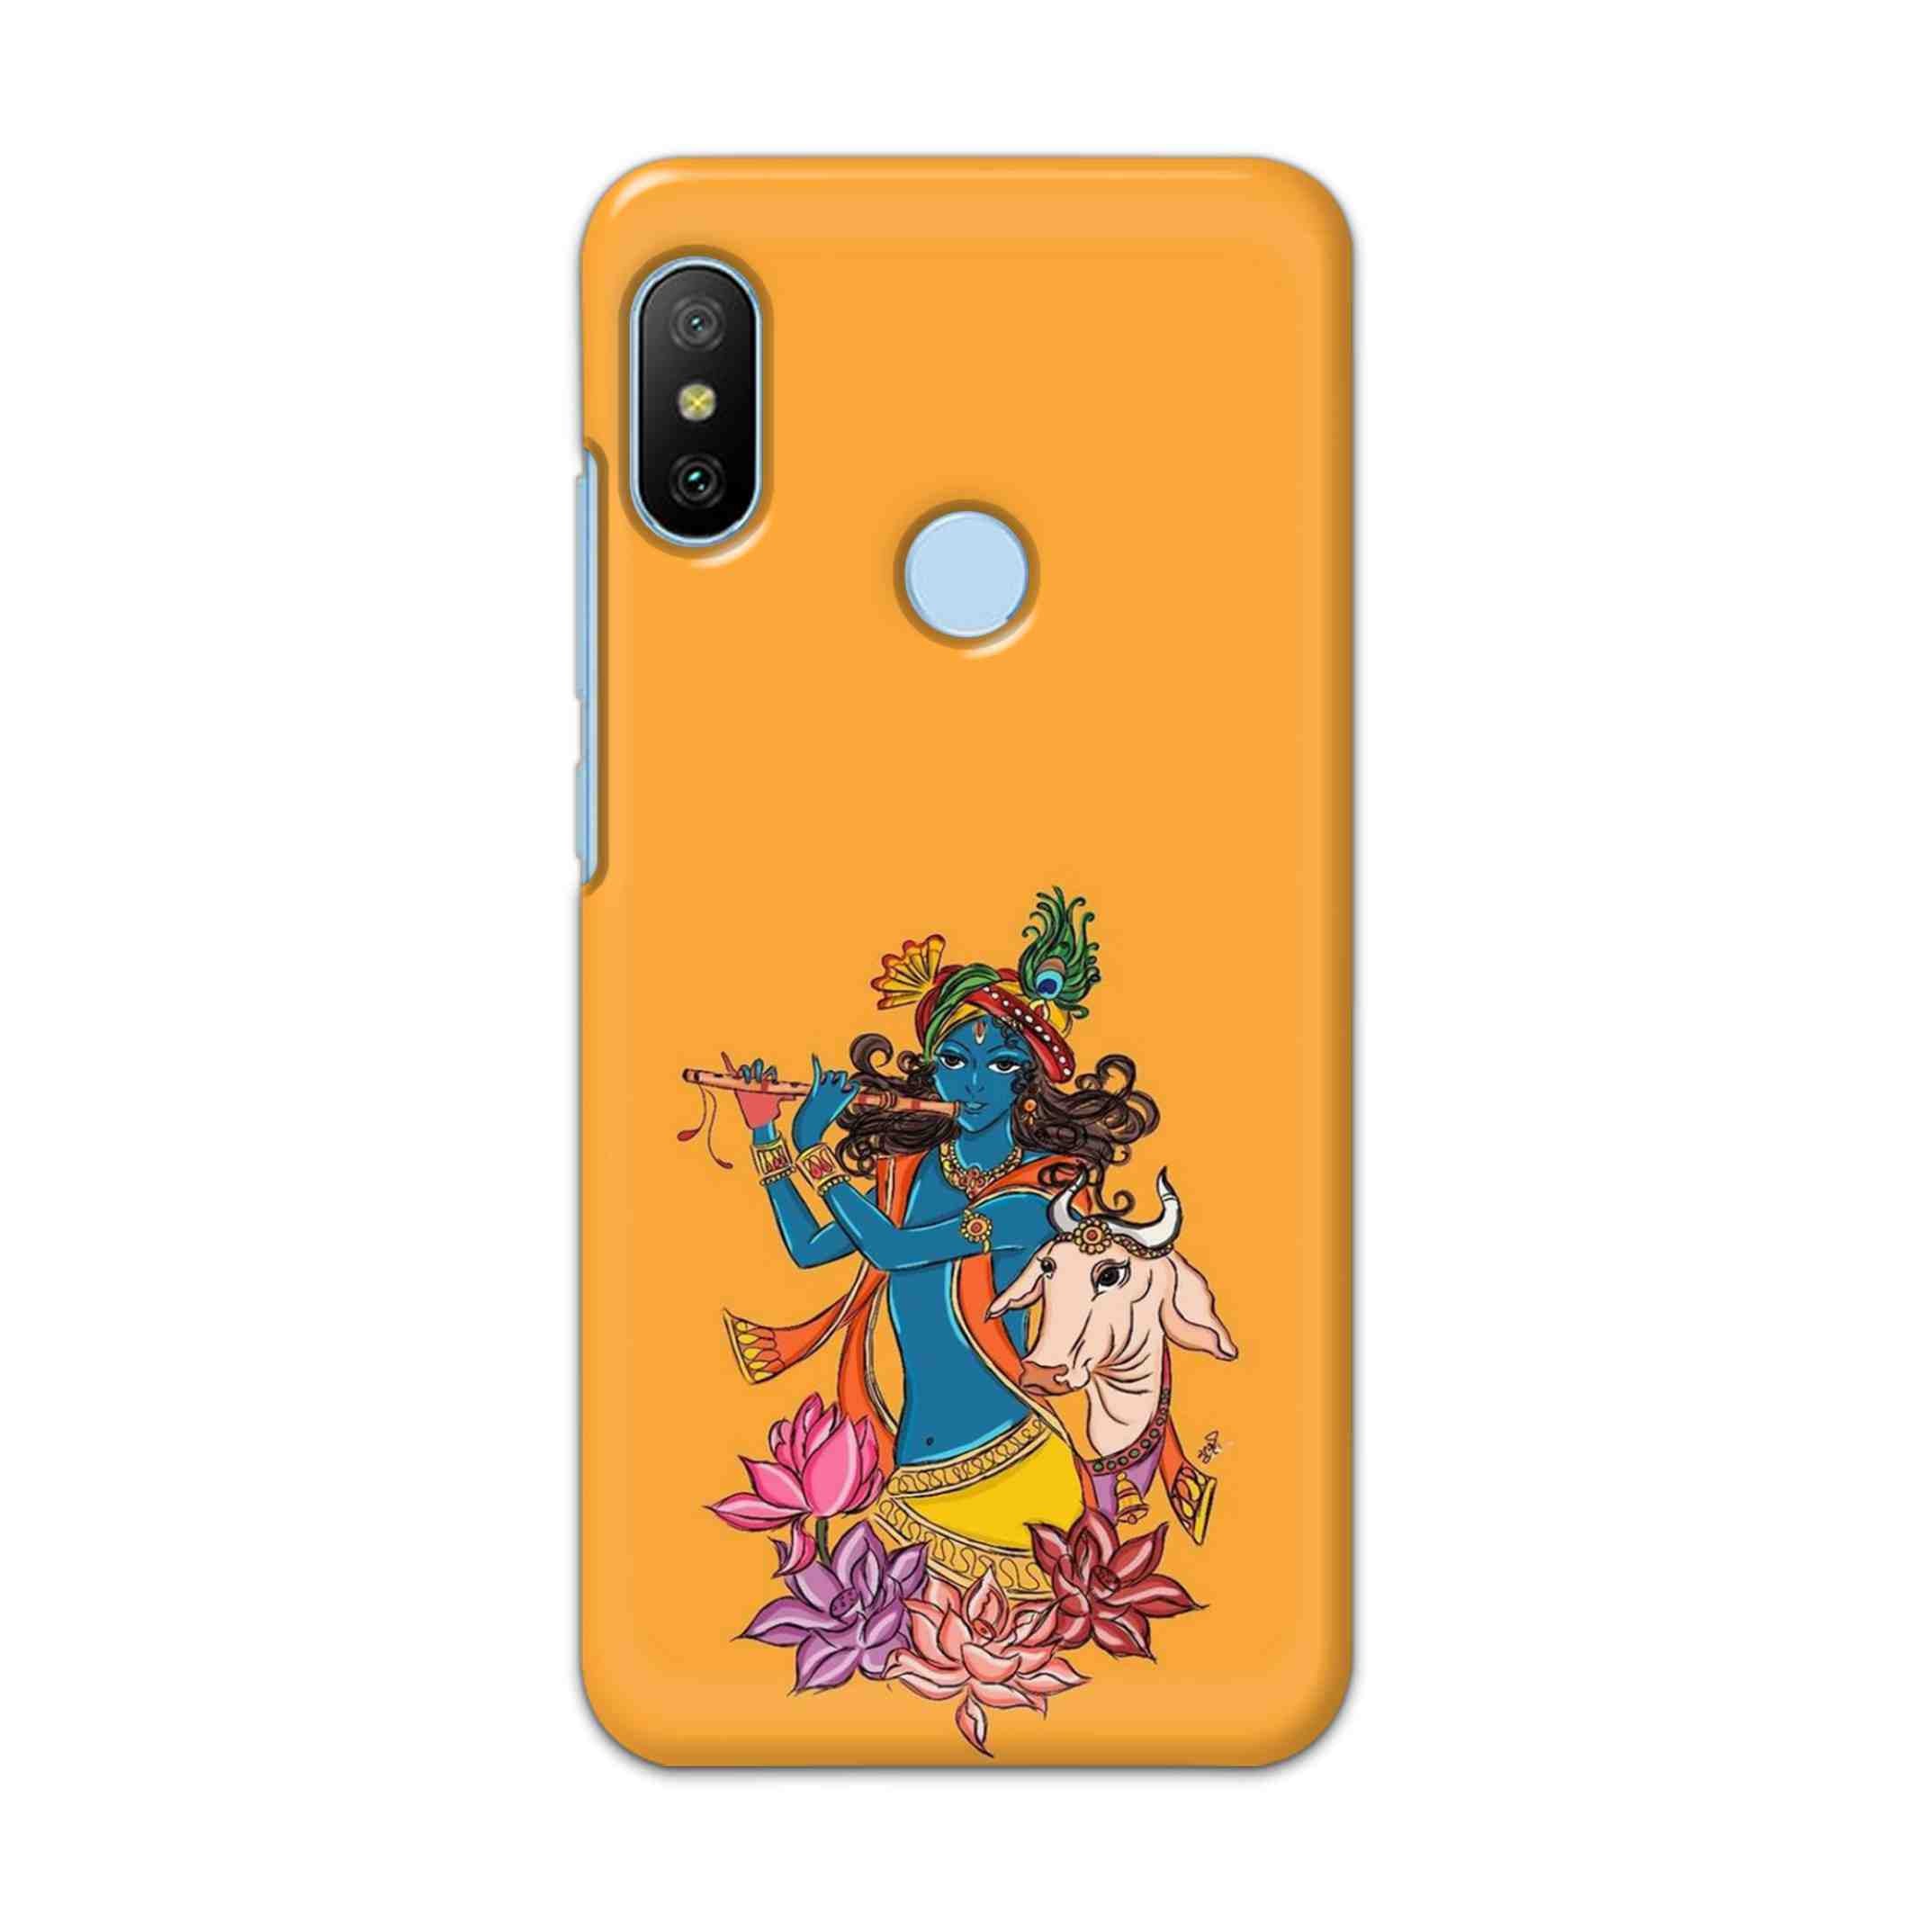 Buy Radhe Krishna Hard Back Mobile Phone Case/Cover For Xiaomi Redmi 6 Pro Online